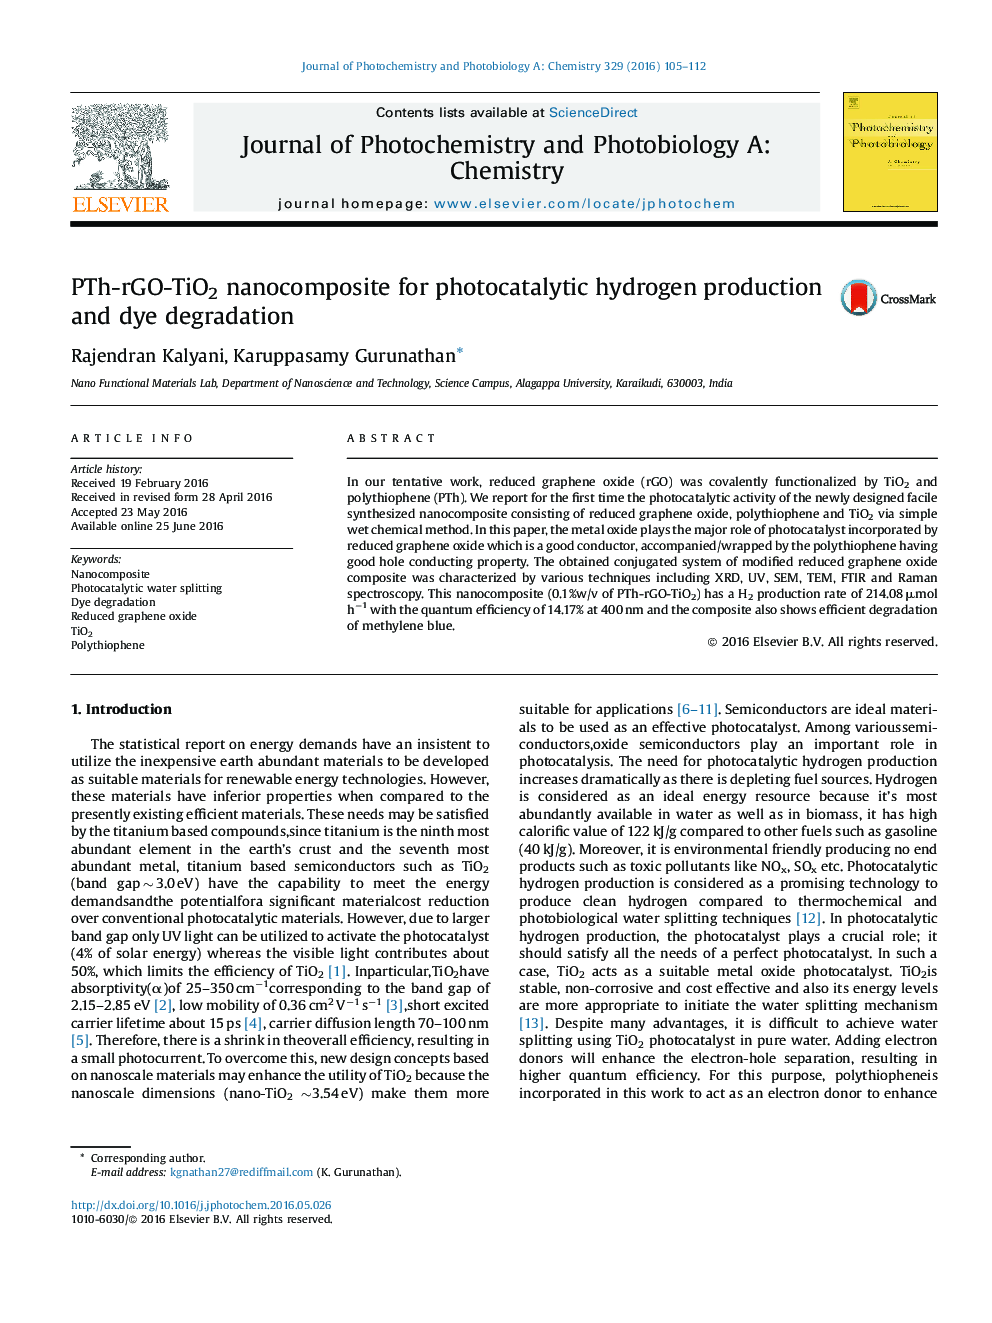 PTh-rGO-TiO2 nanocomposite for photocatalytic hydrogen production and dye degradation